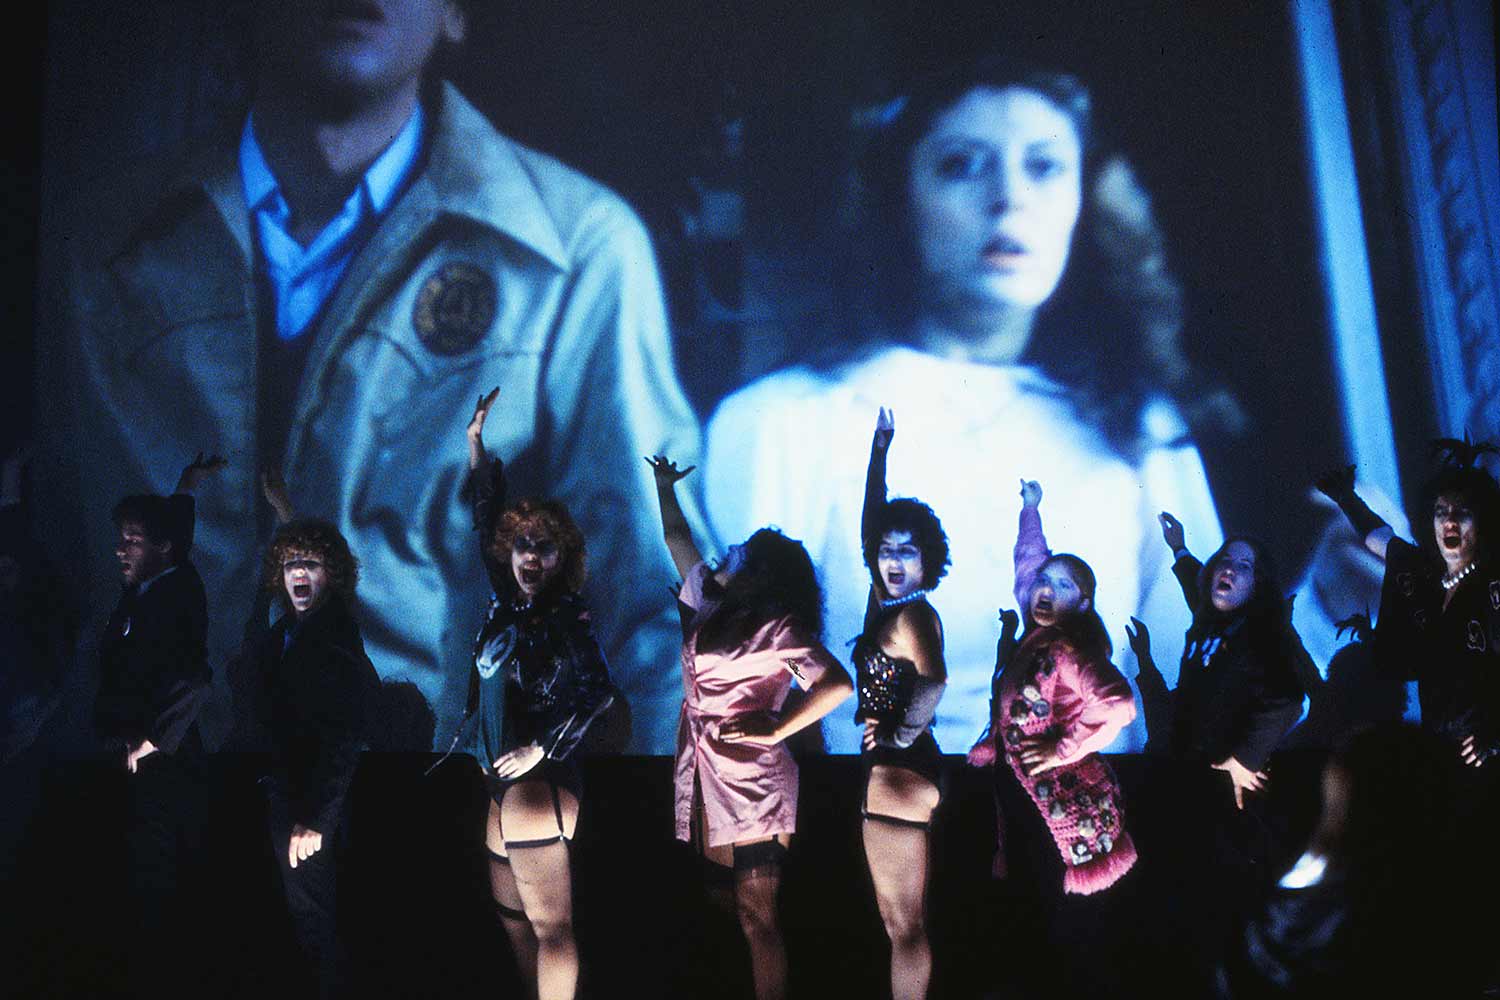 Rocky Horror Show scene in the film Fame (1980)